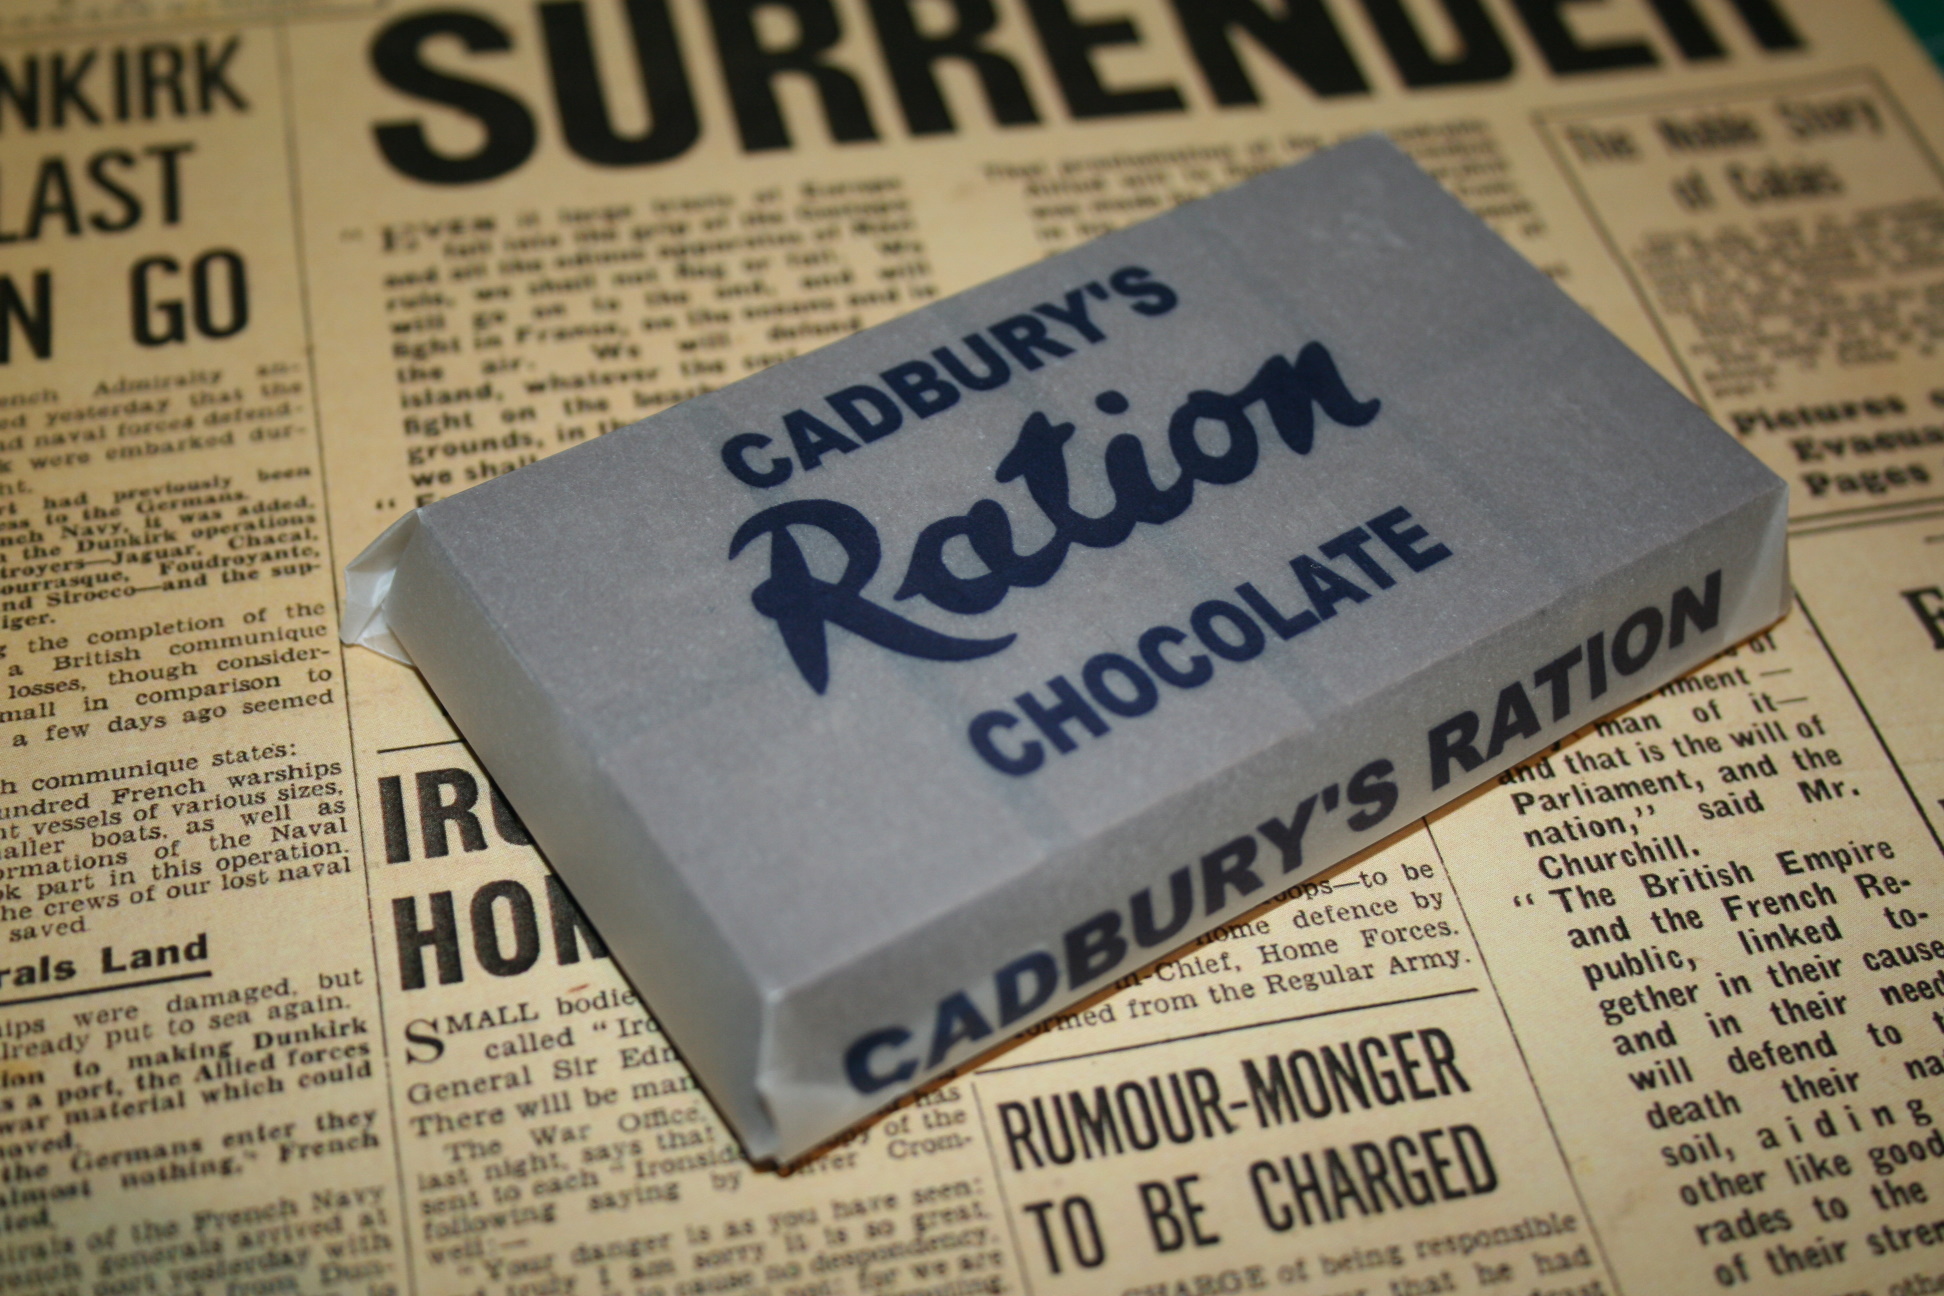 Cadburys Ration Chocolate bar mould